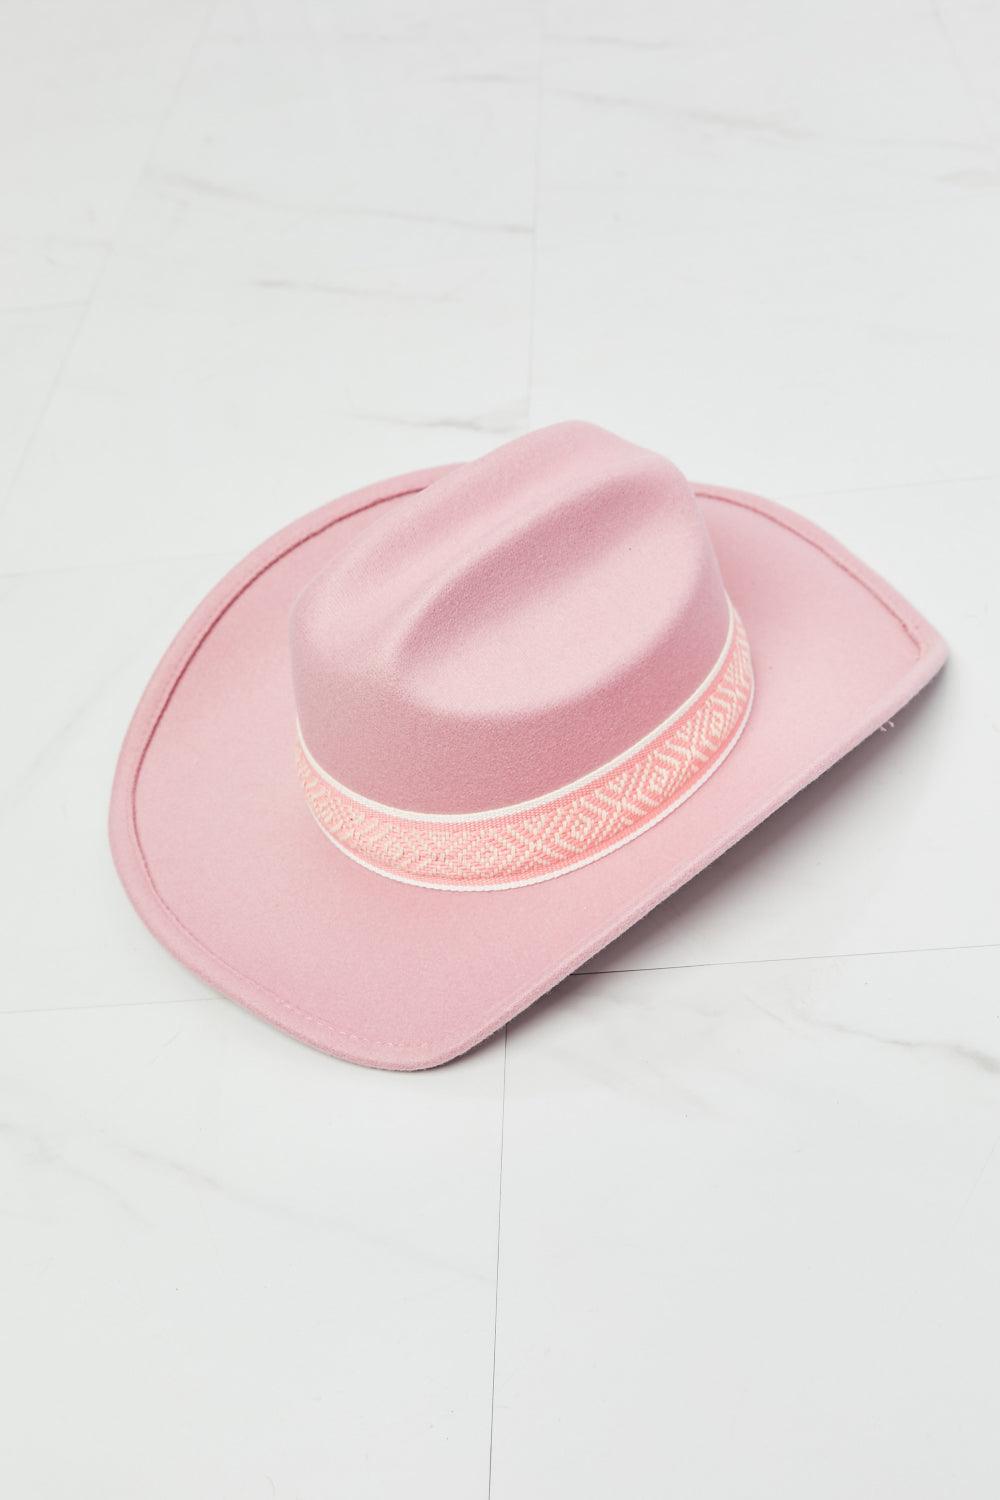 Fame Western Cutie Cowboy Hat in Pink - The Fiery Jasmine